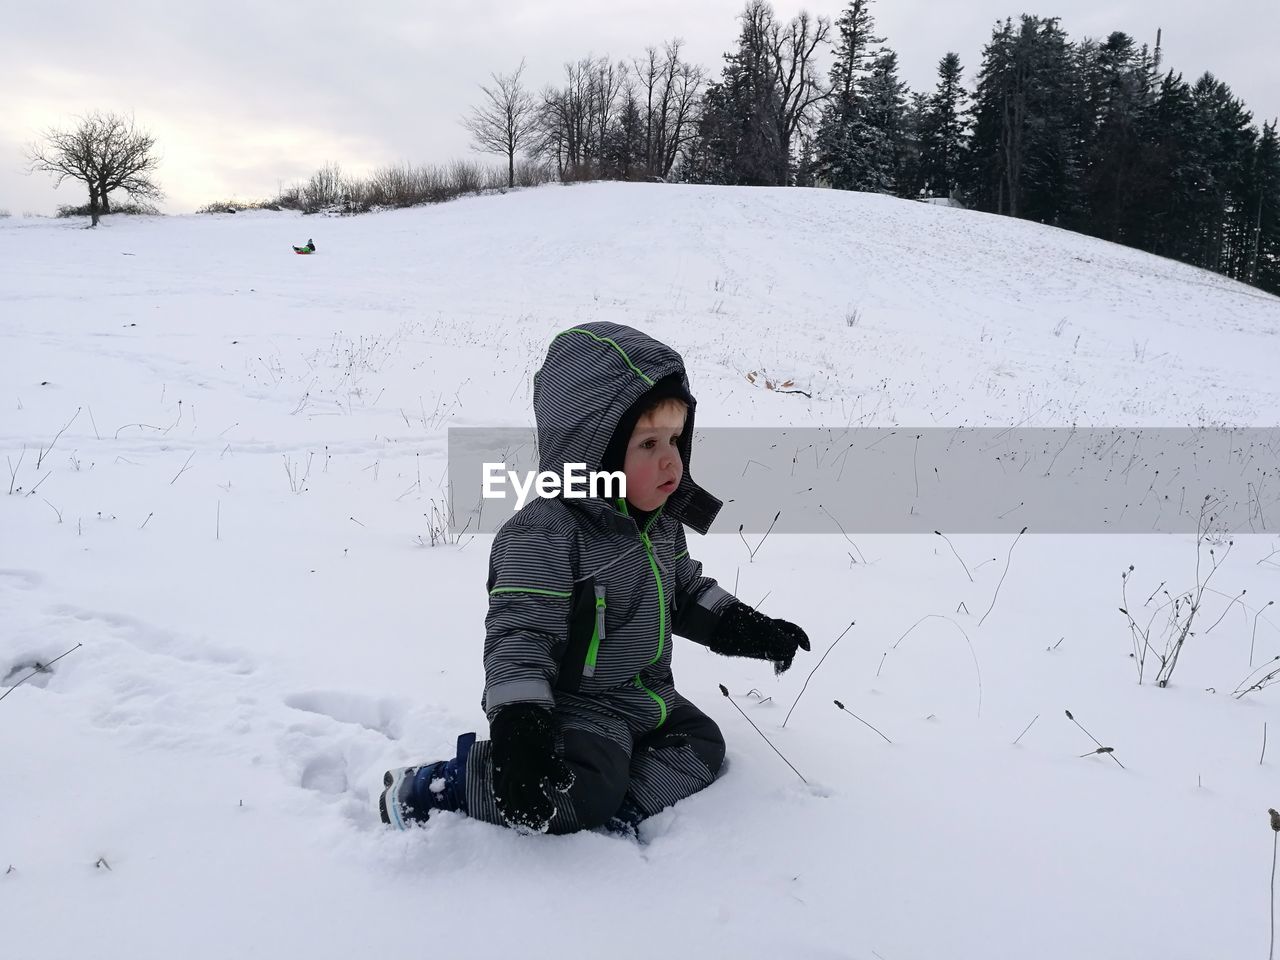 Boy playing on snow field